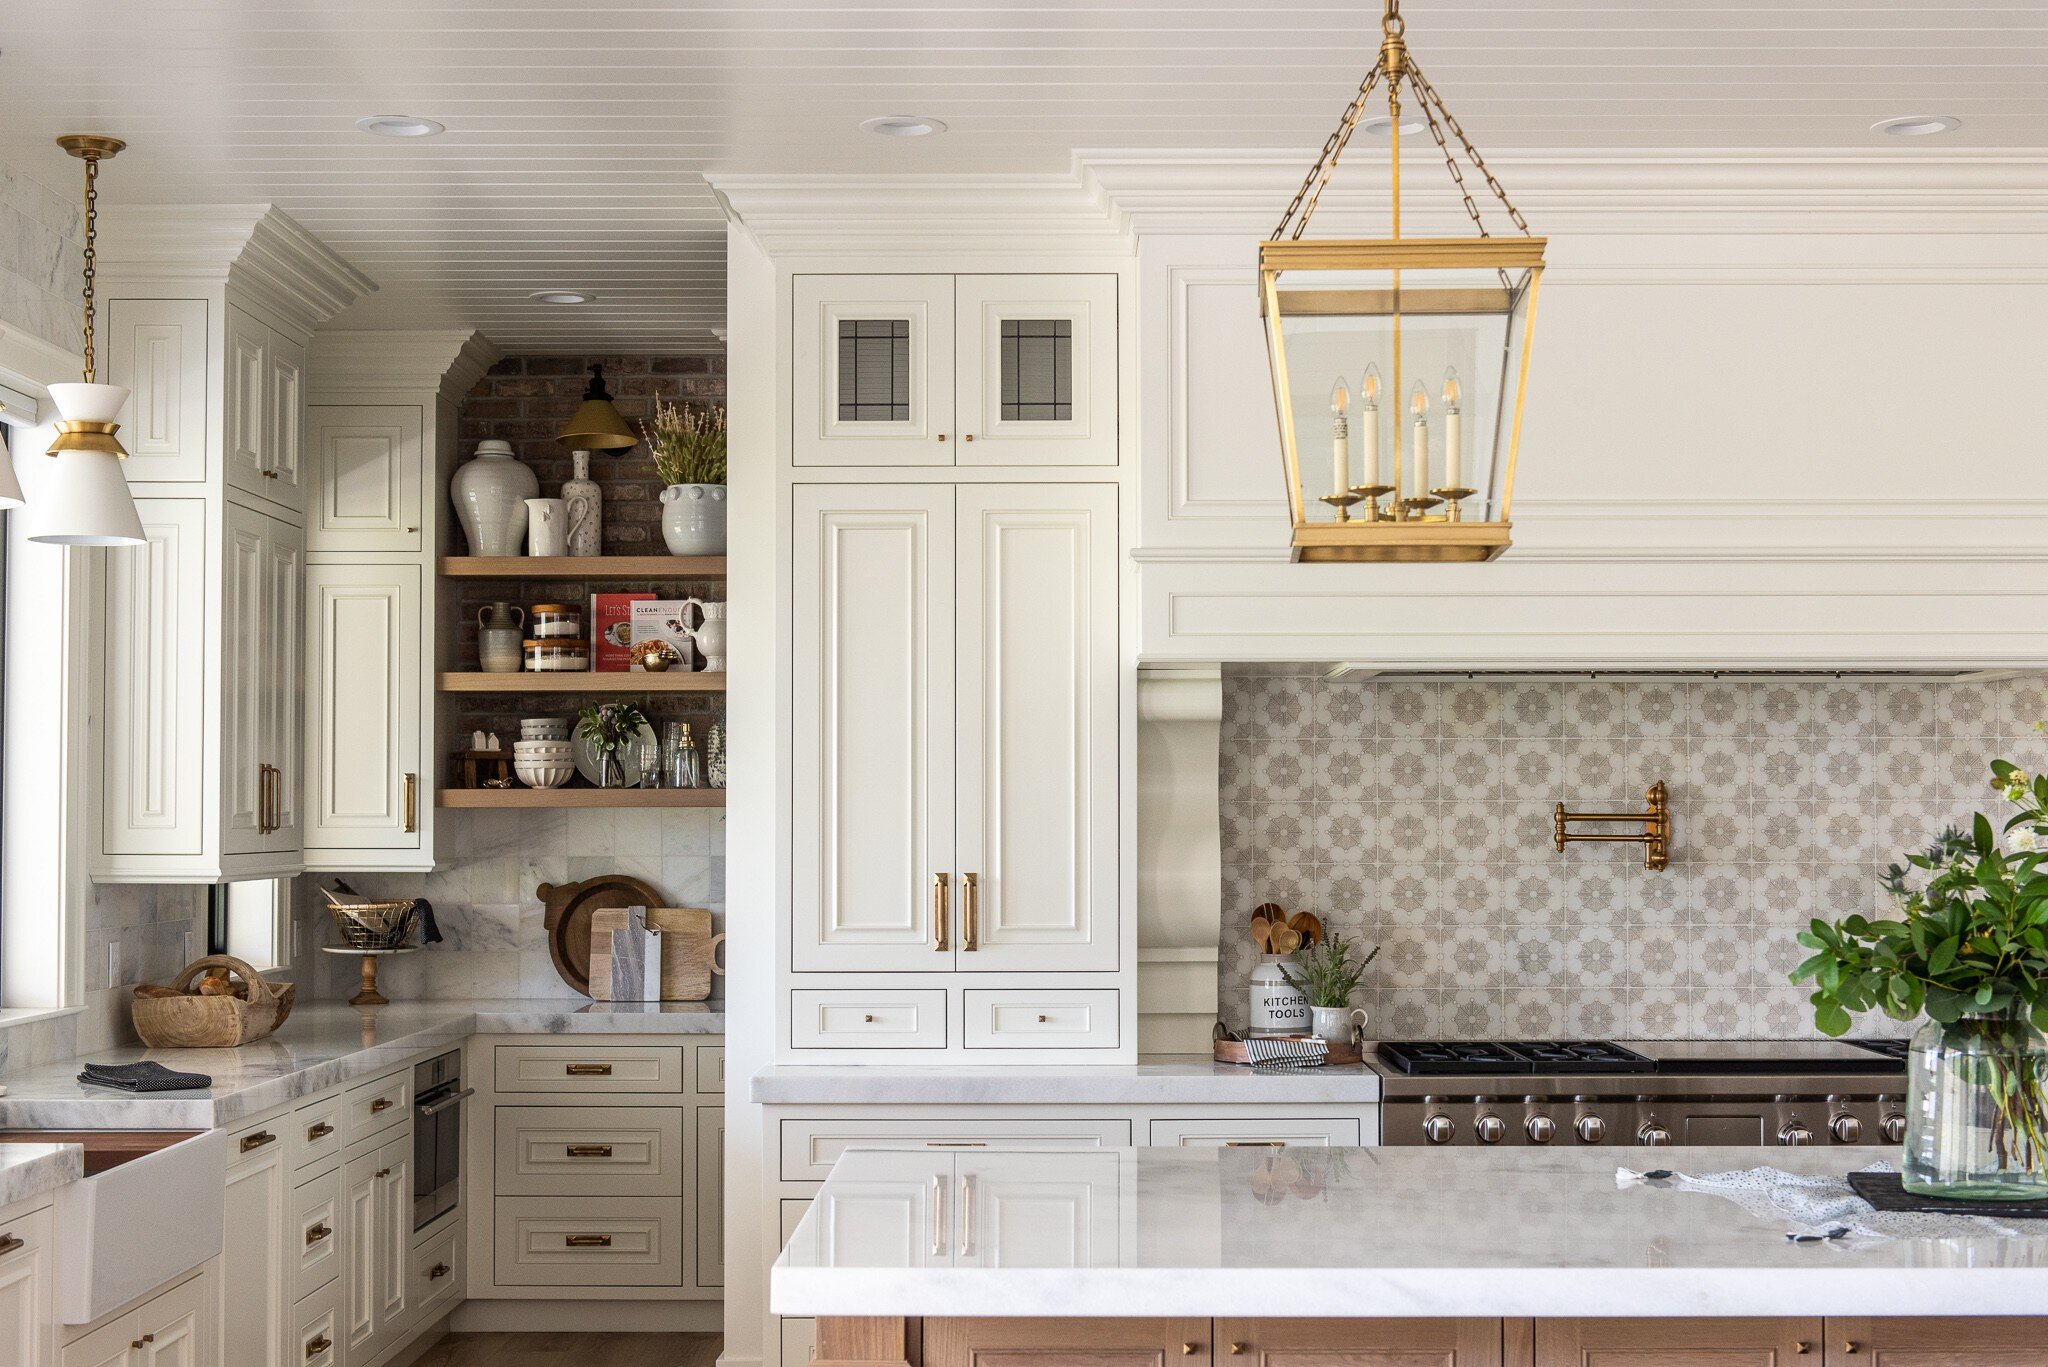 white dove kitchen cabinets with quartz countertops.jpeg